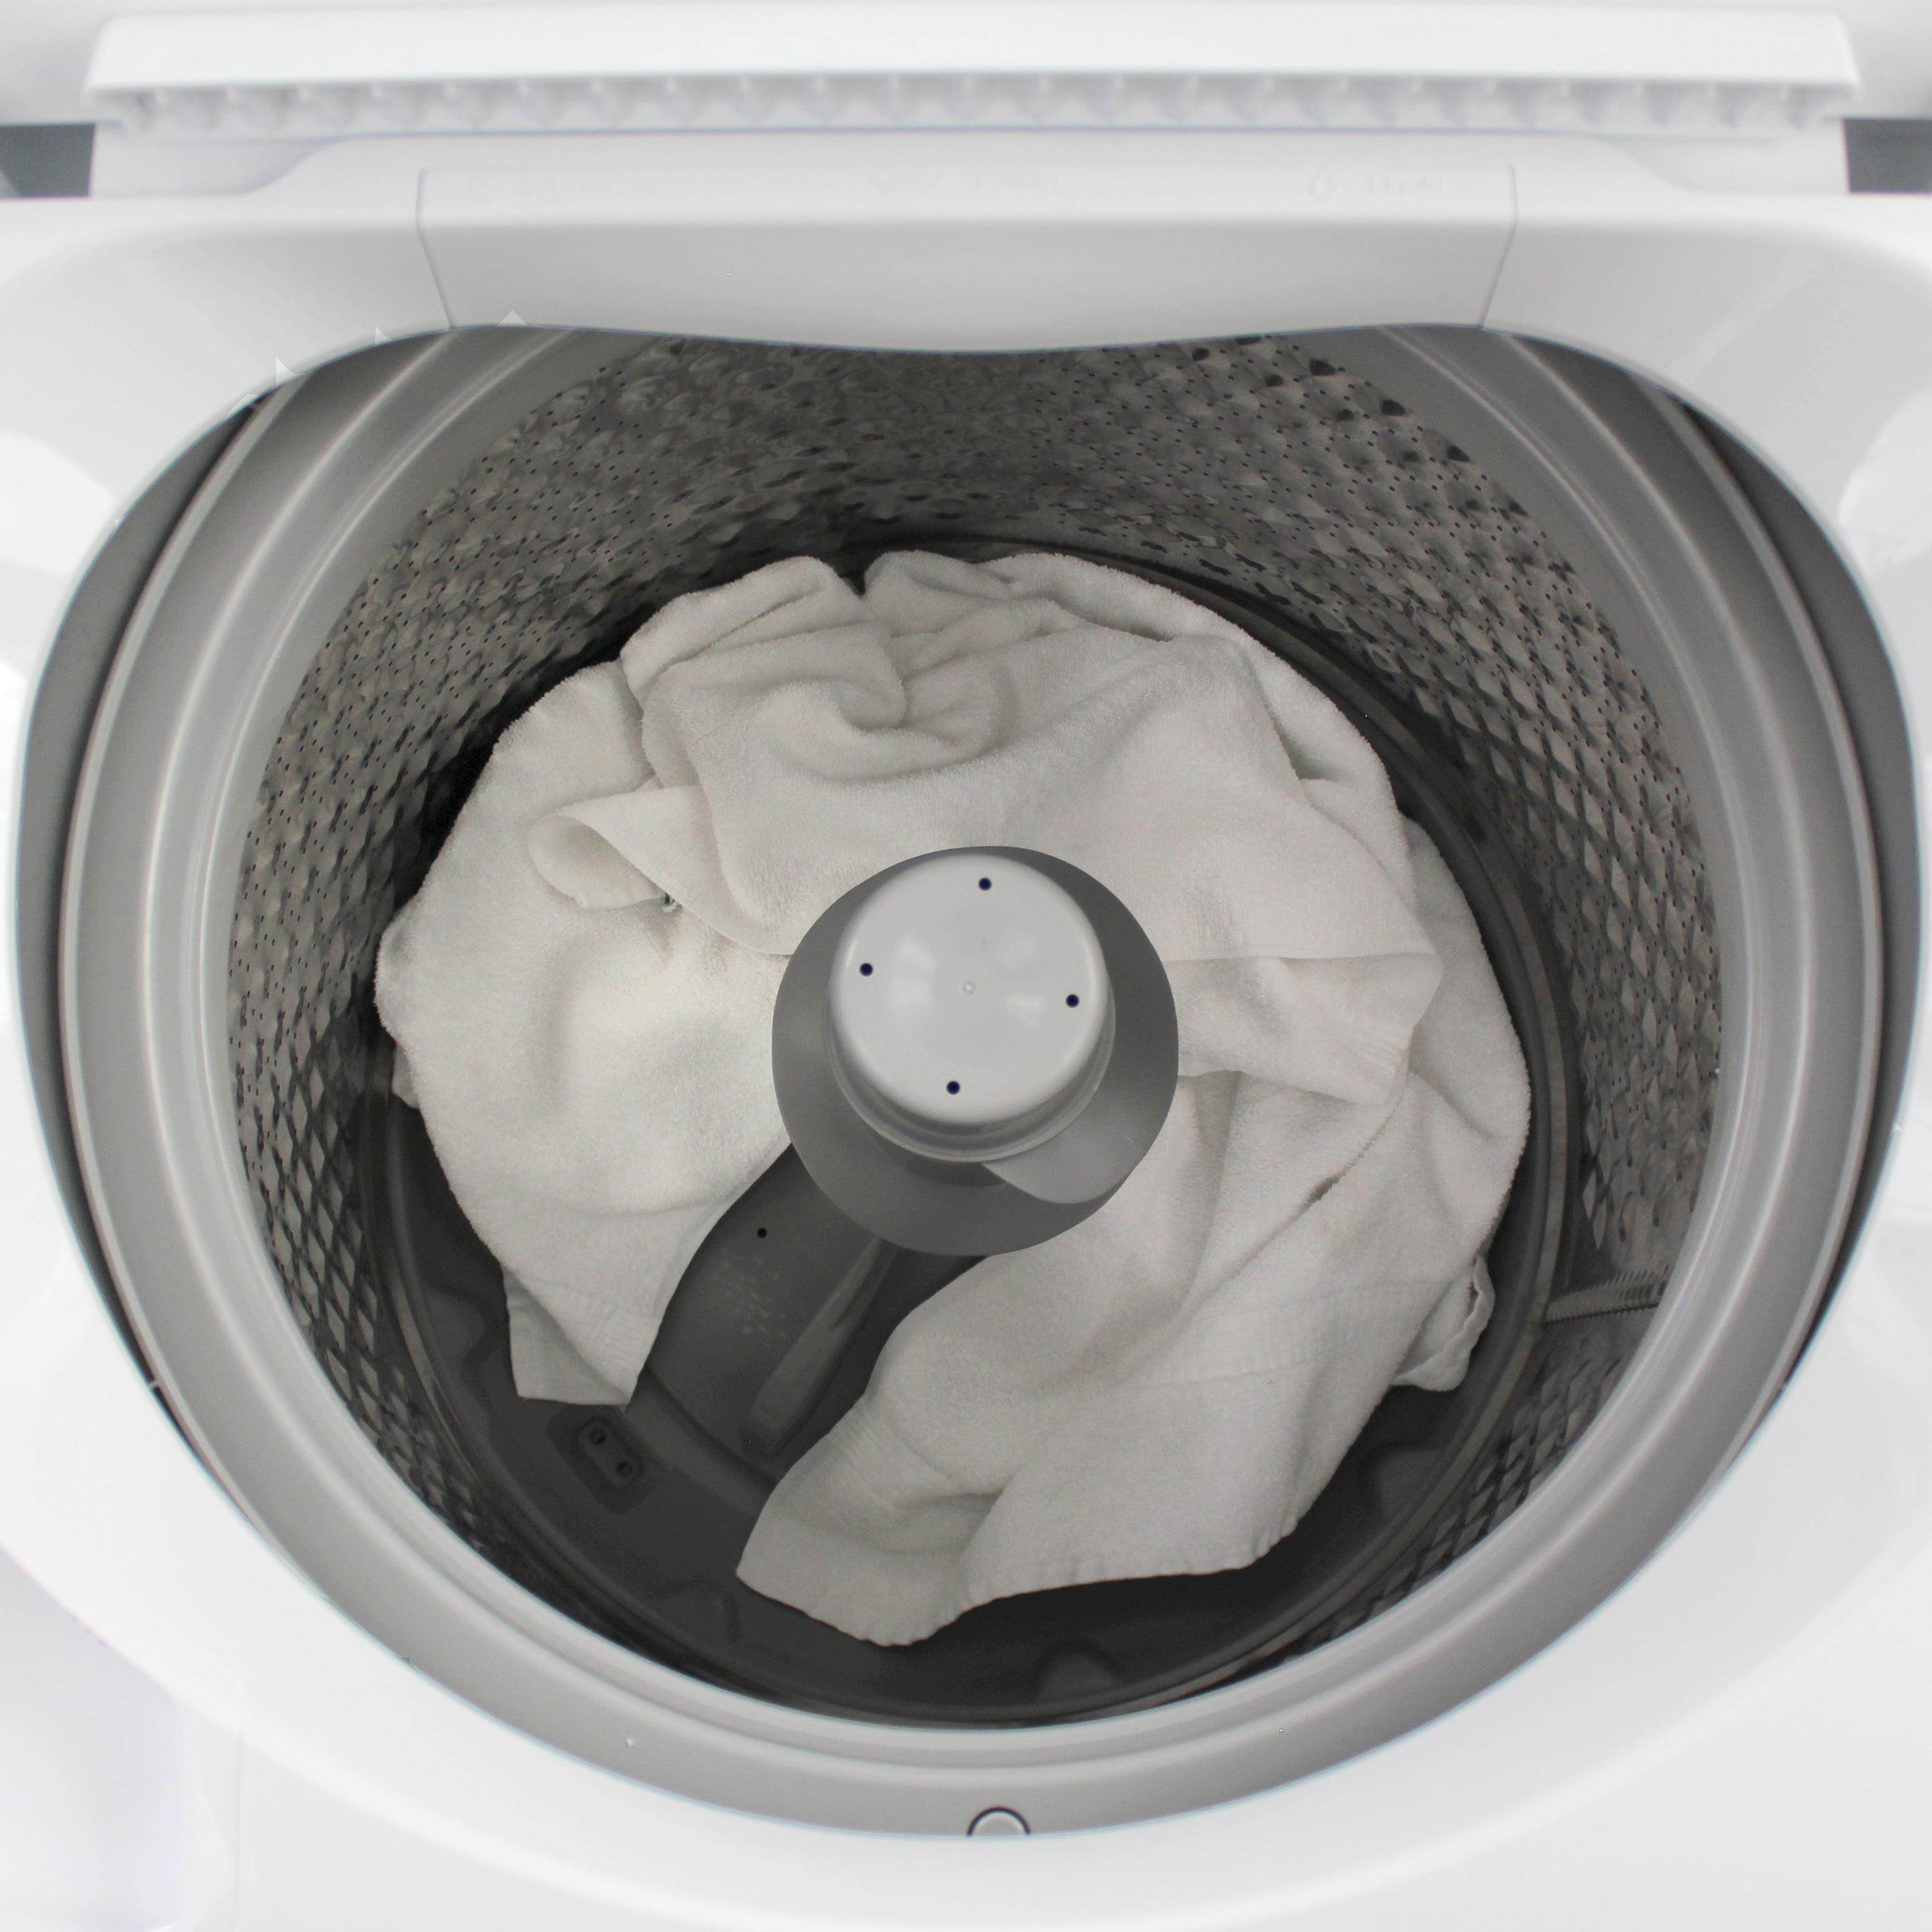 Avanti 3.0 cu. ft. Top Load Washing Machine, in White (STW30D0W)